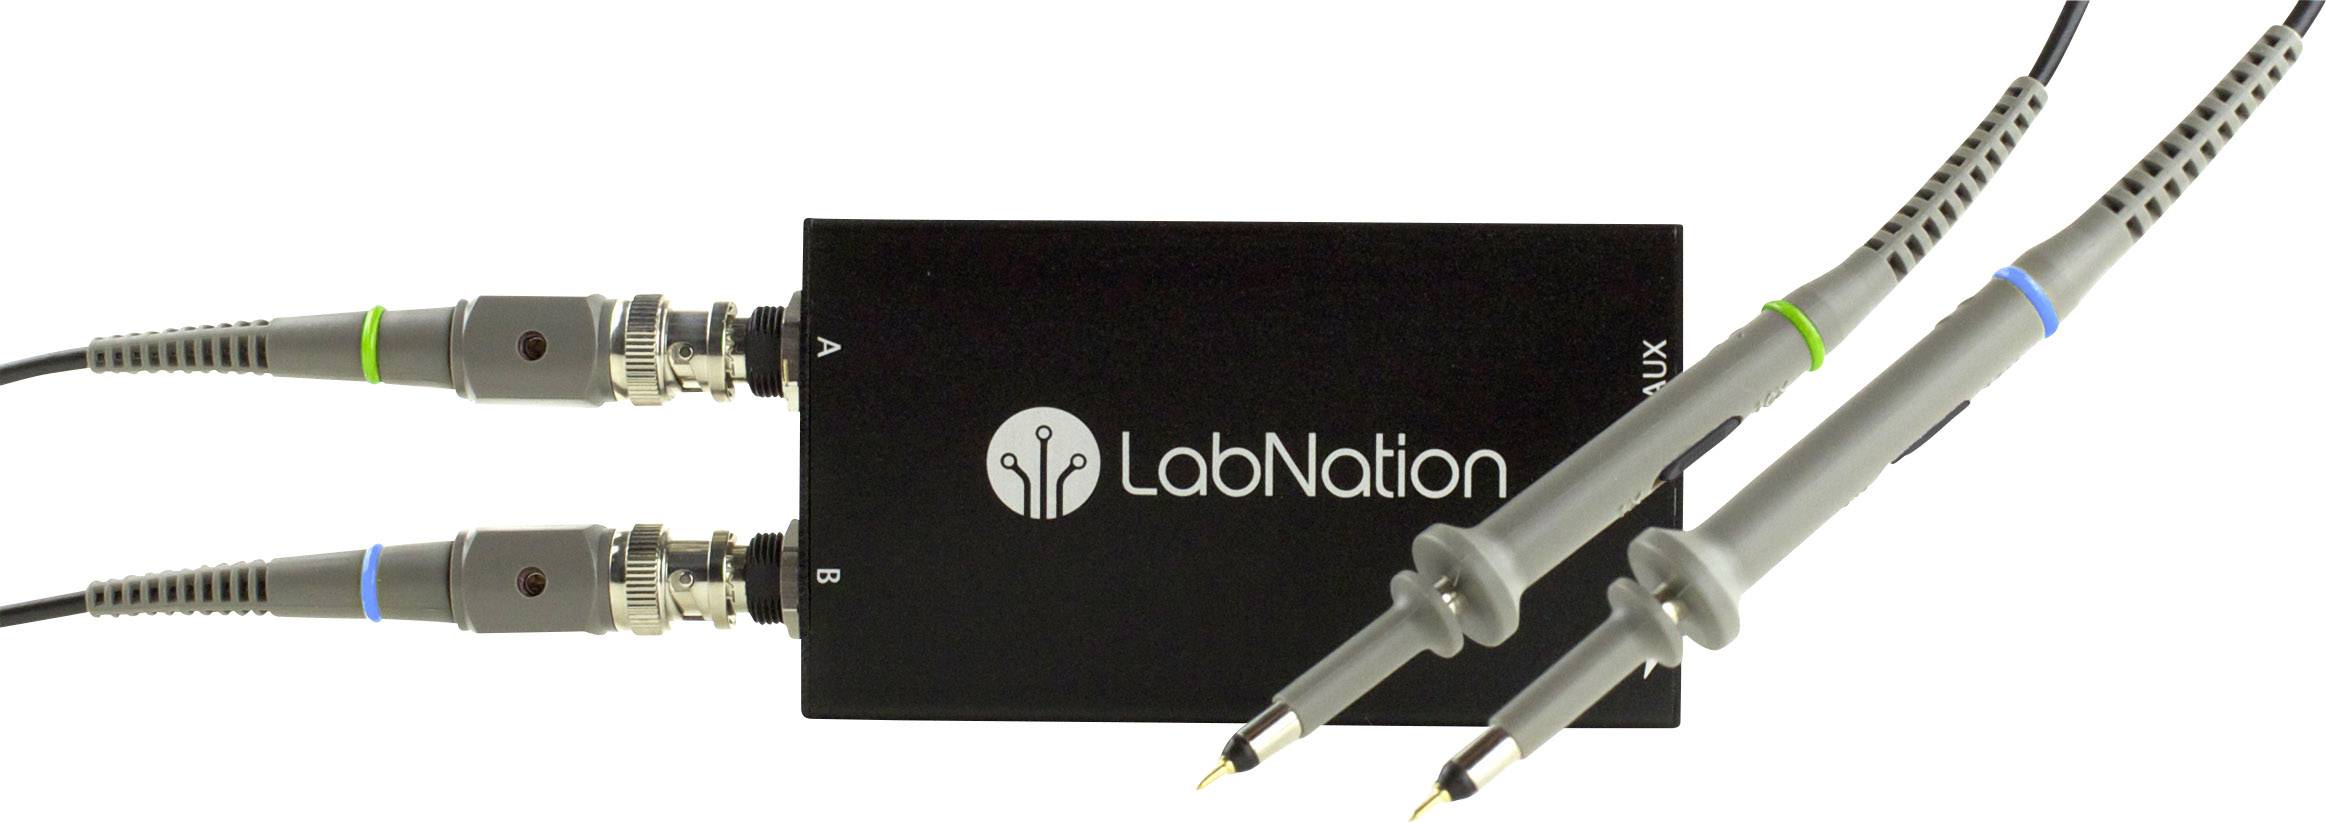 labnation smartscope amazon